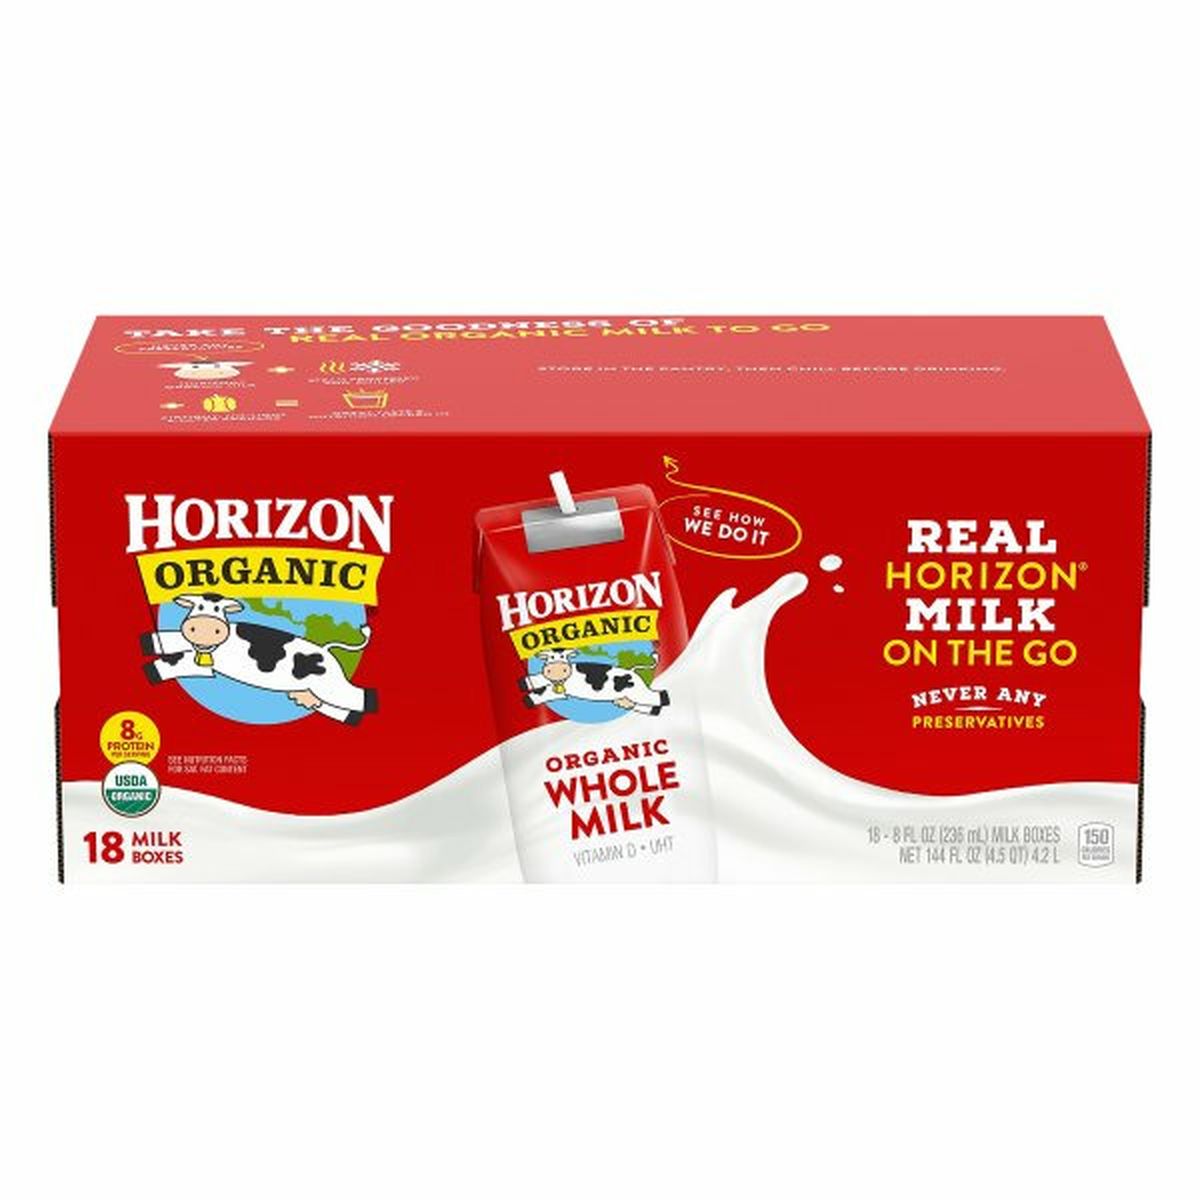 Calories in Horizon Organic Whole Milk